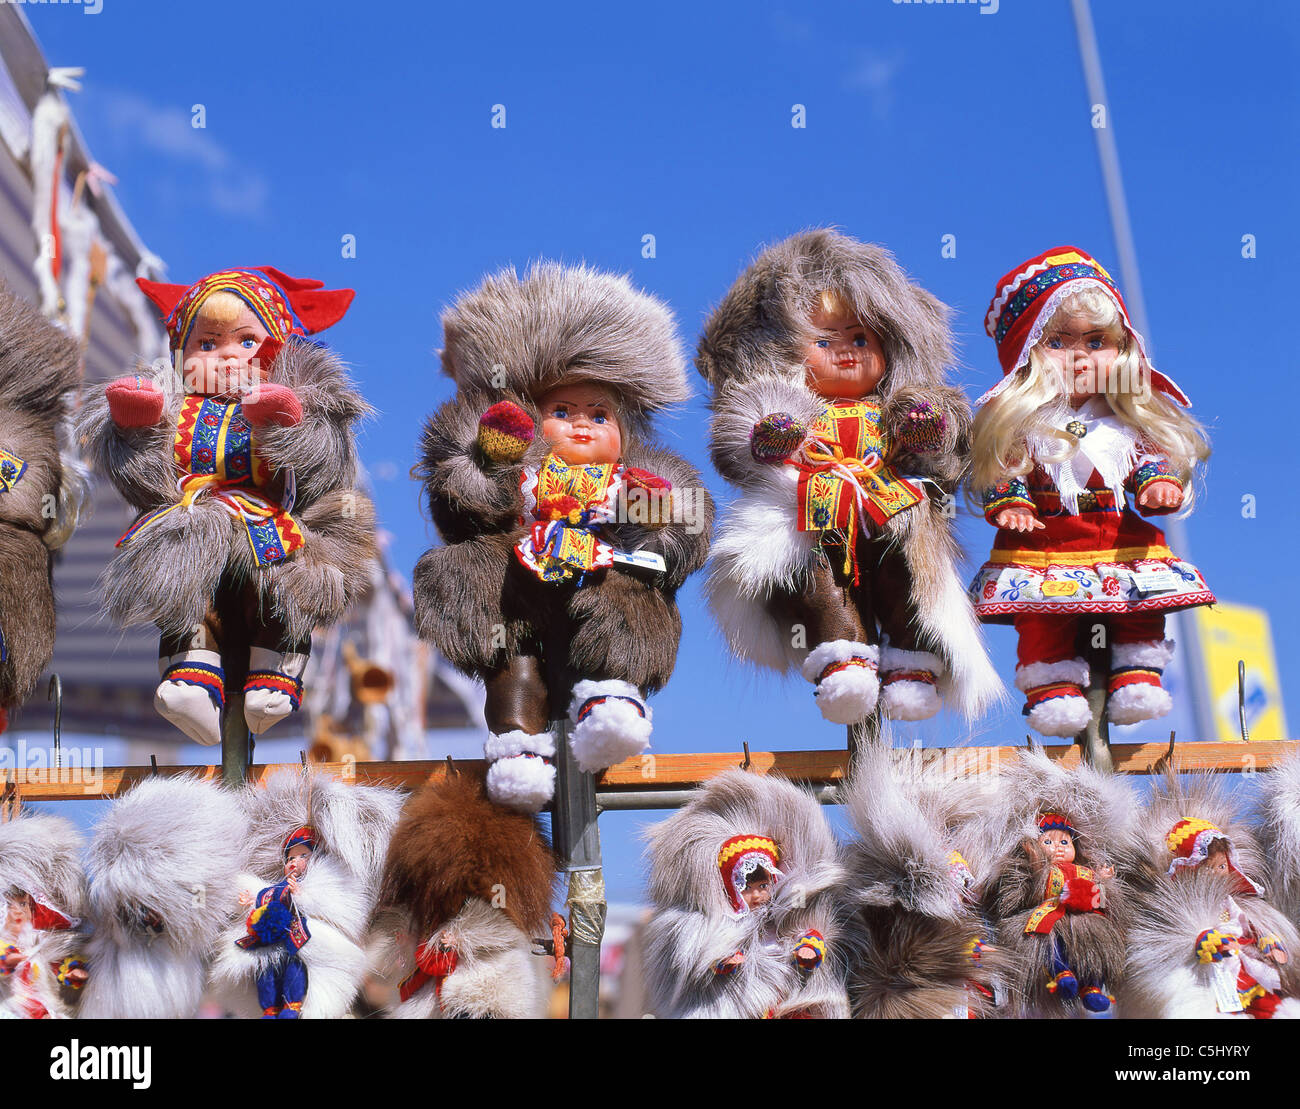 Finnish souvenir dolls in outdoor market, Kauppatori Market Square, Helsinki, Uusimaa Region, Republic of Finland Stock Photo